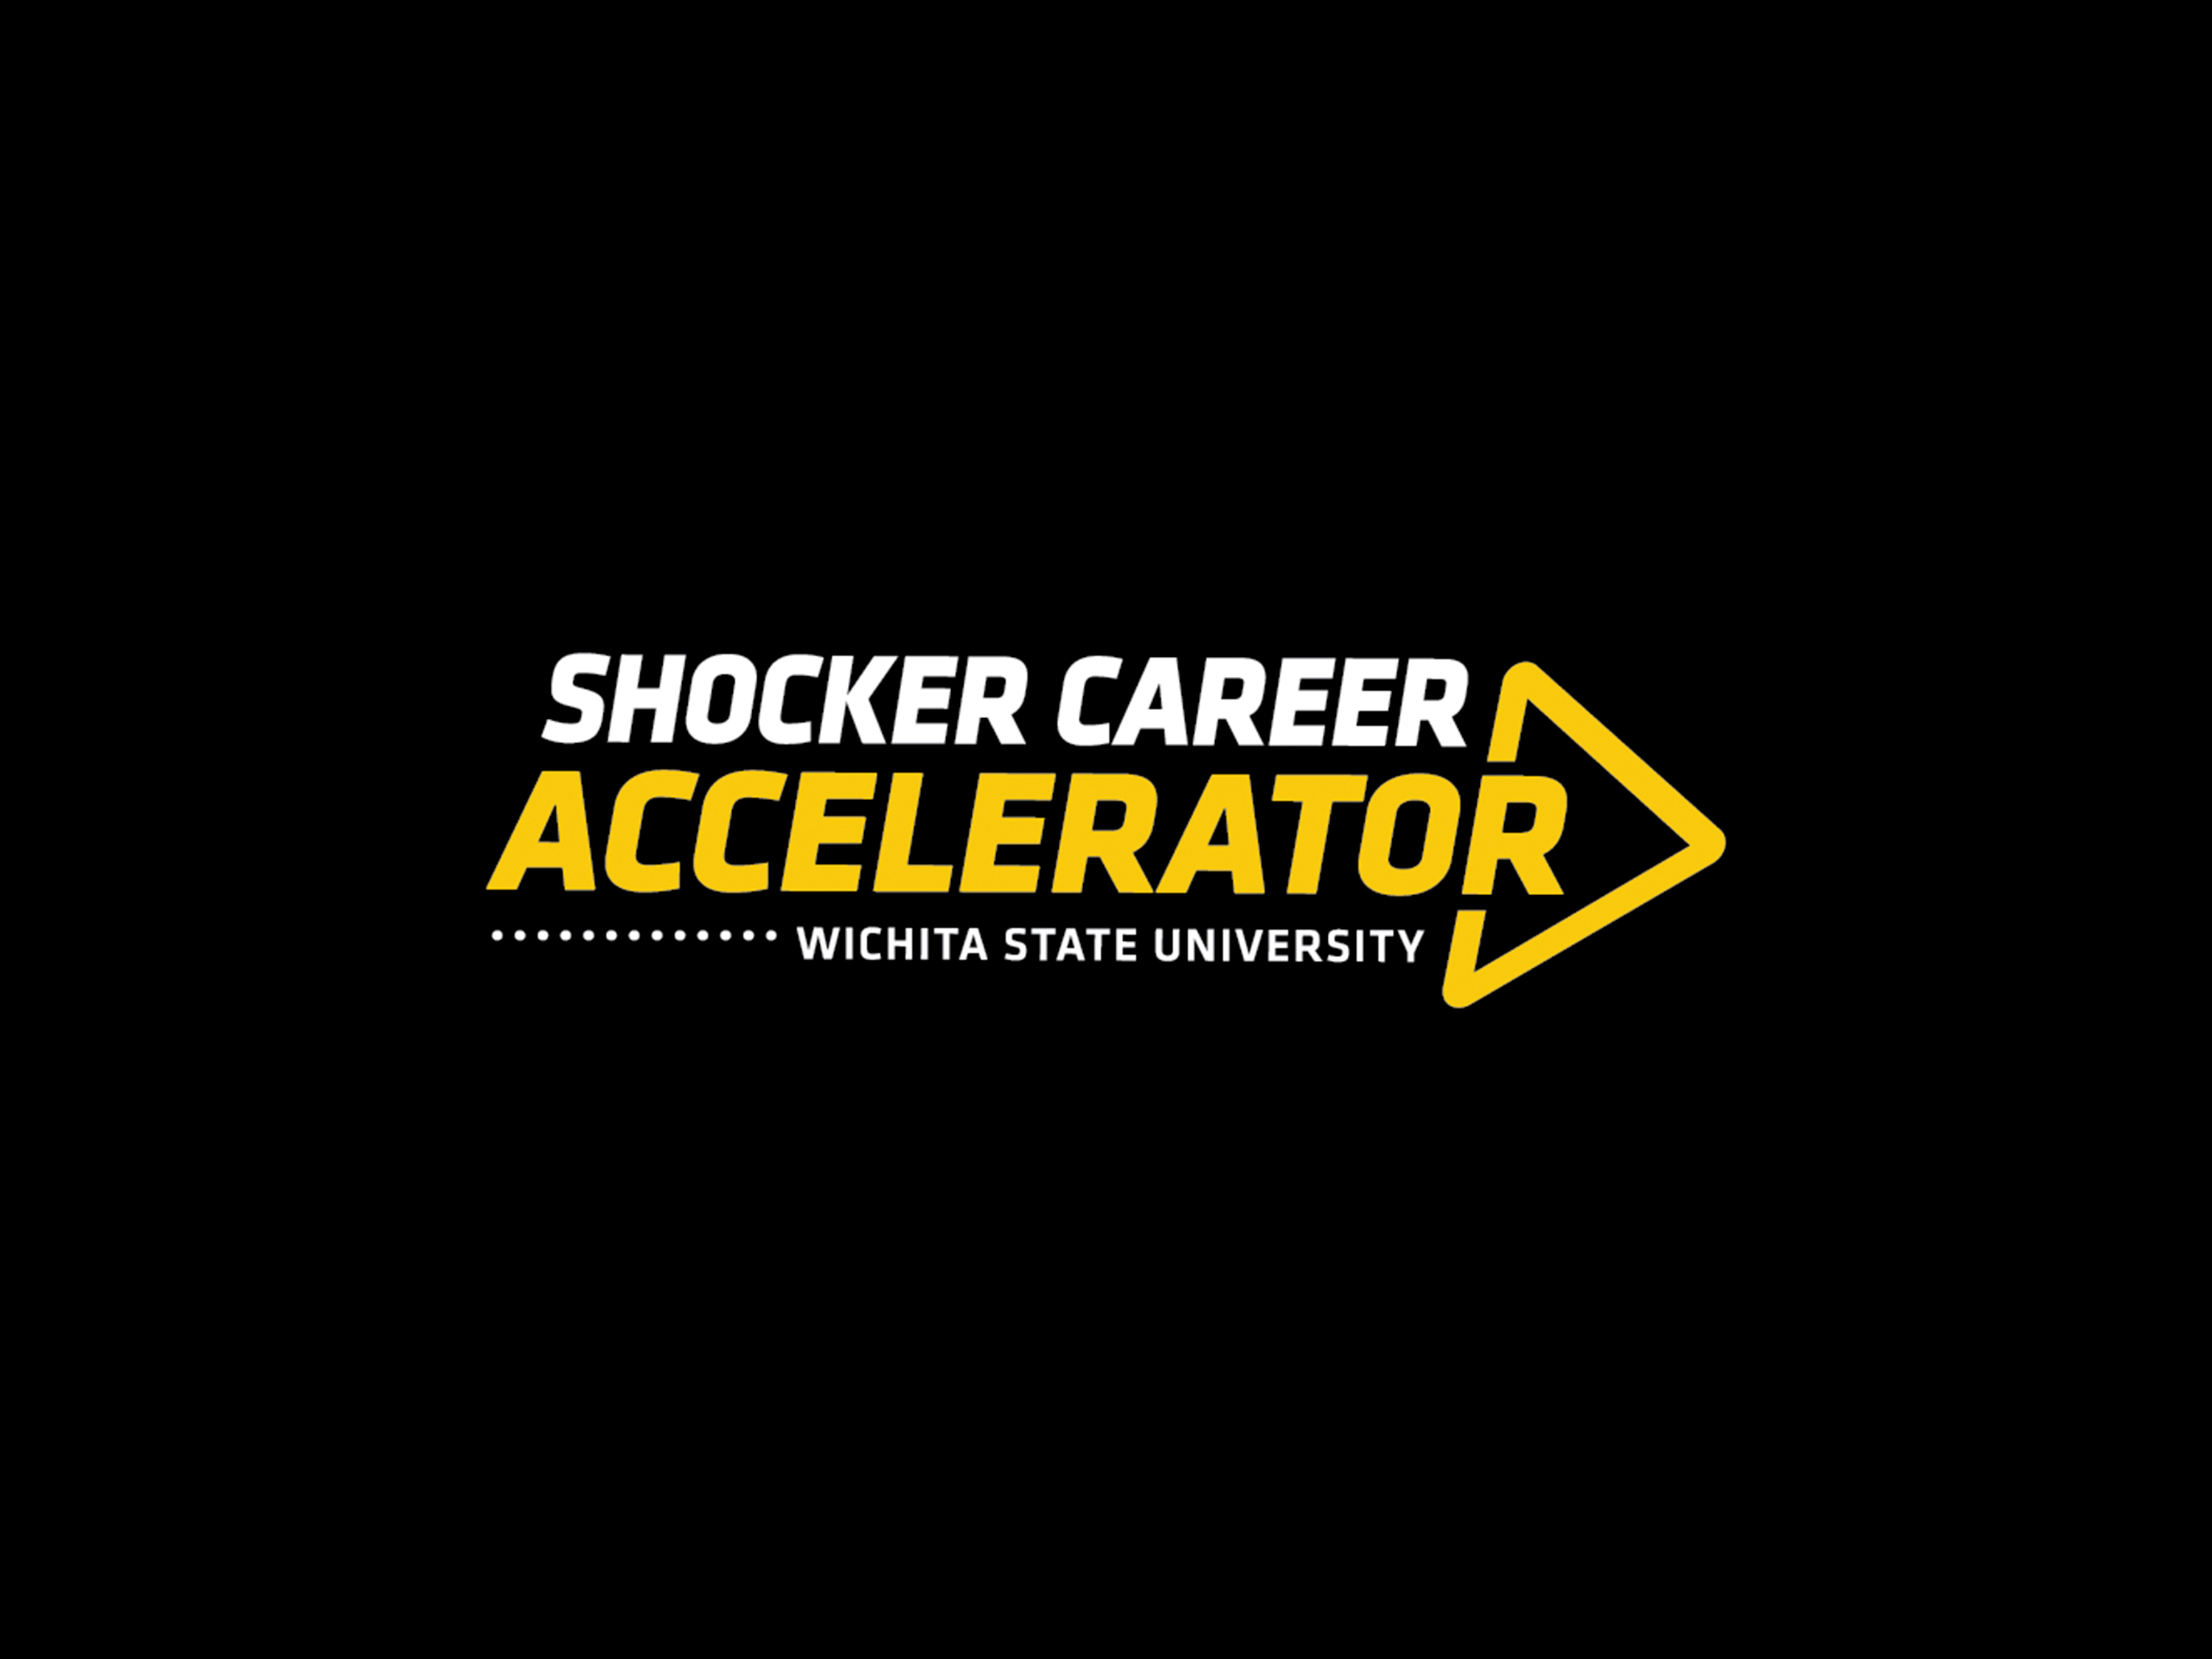 Hero image of the Shocker Career Accelerator logo.